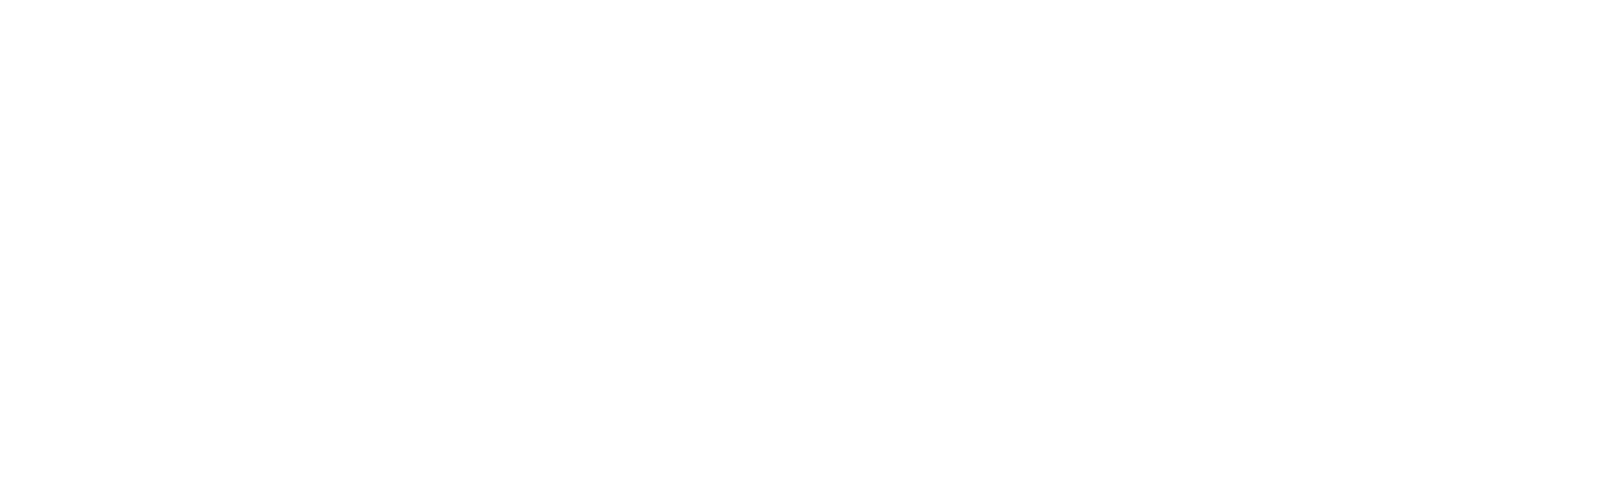 WiseTech Global
 logo large for dark backgrounds (transparent PNG)